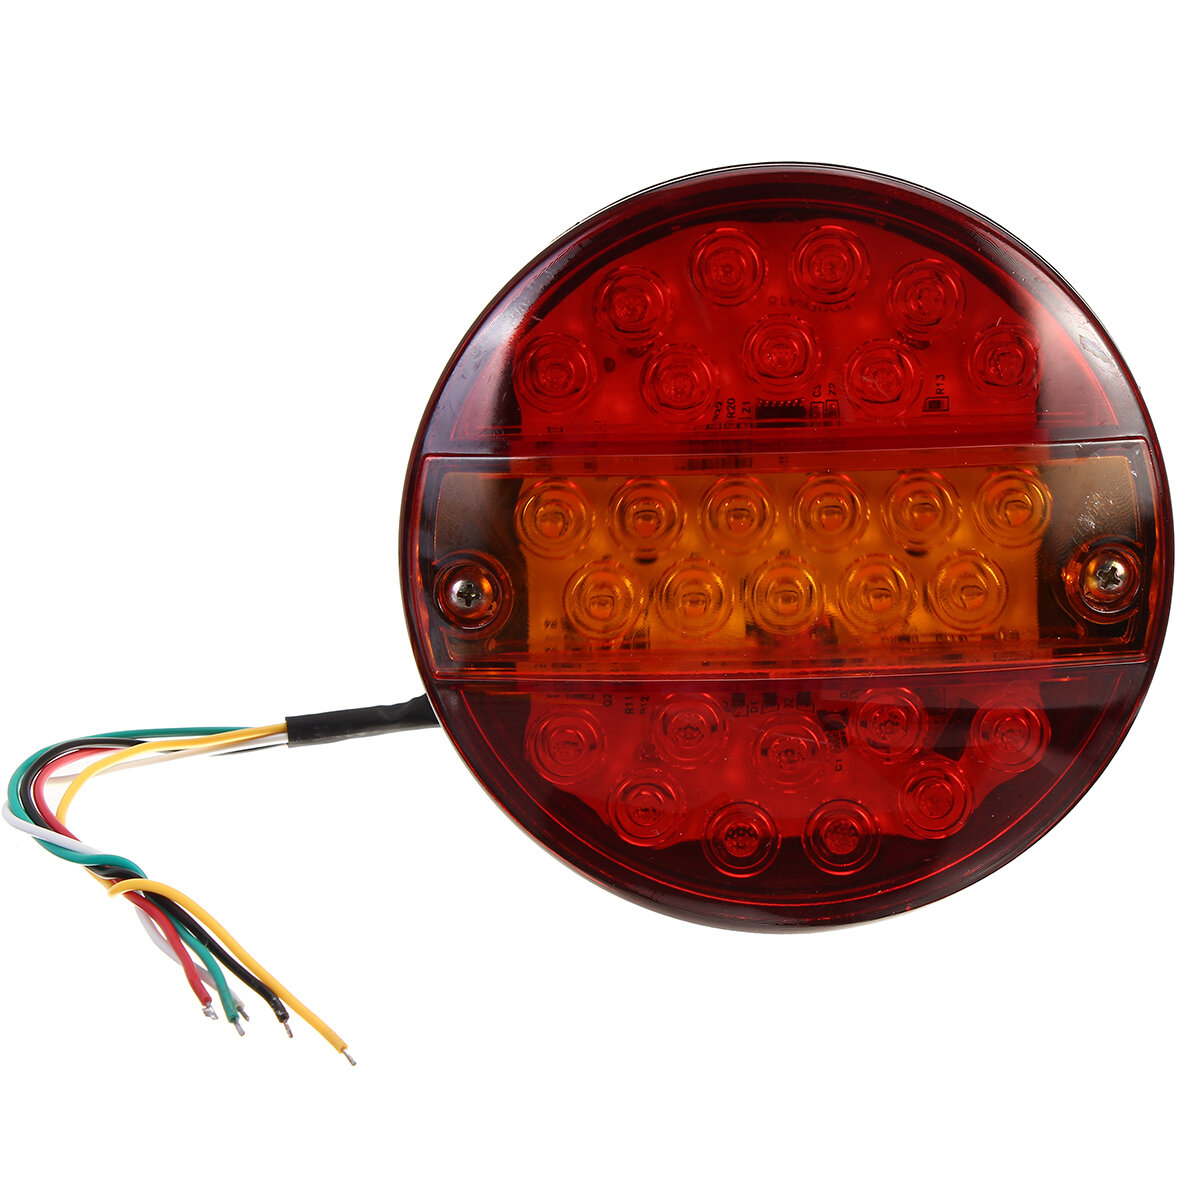 Image of 4Pcs12V Led Tail Light Hamburger Rear Lamp Stop Indicator Brake 4 Function